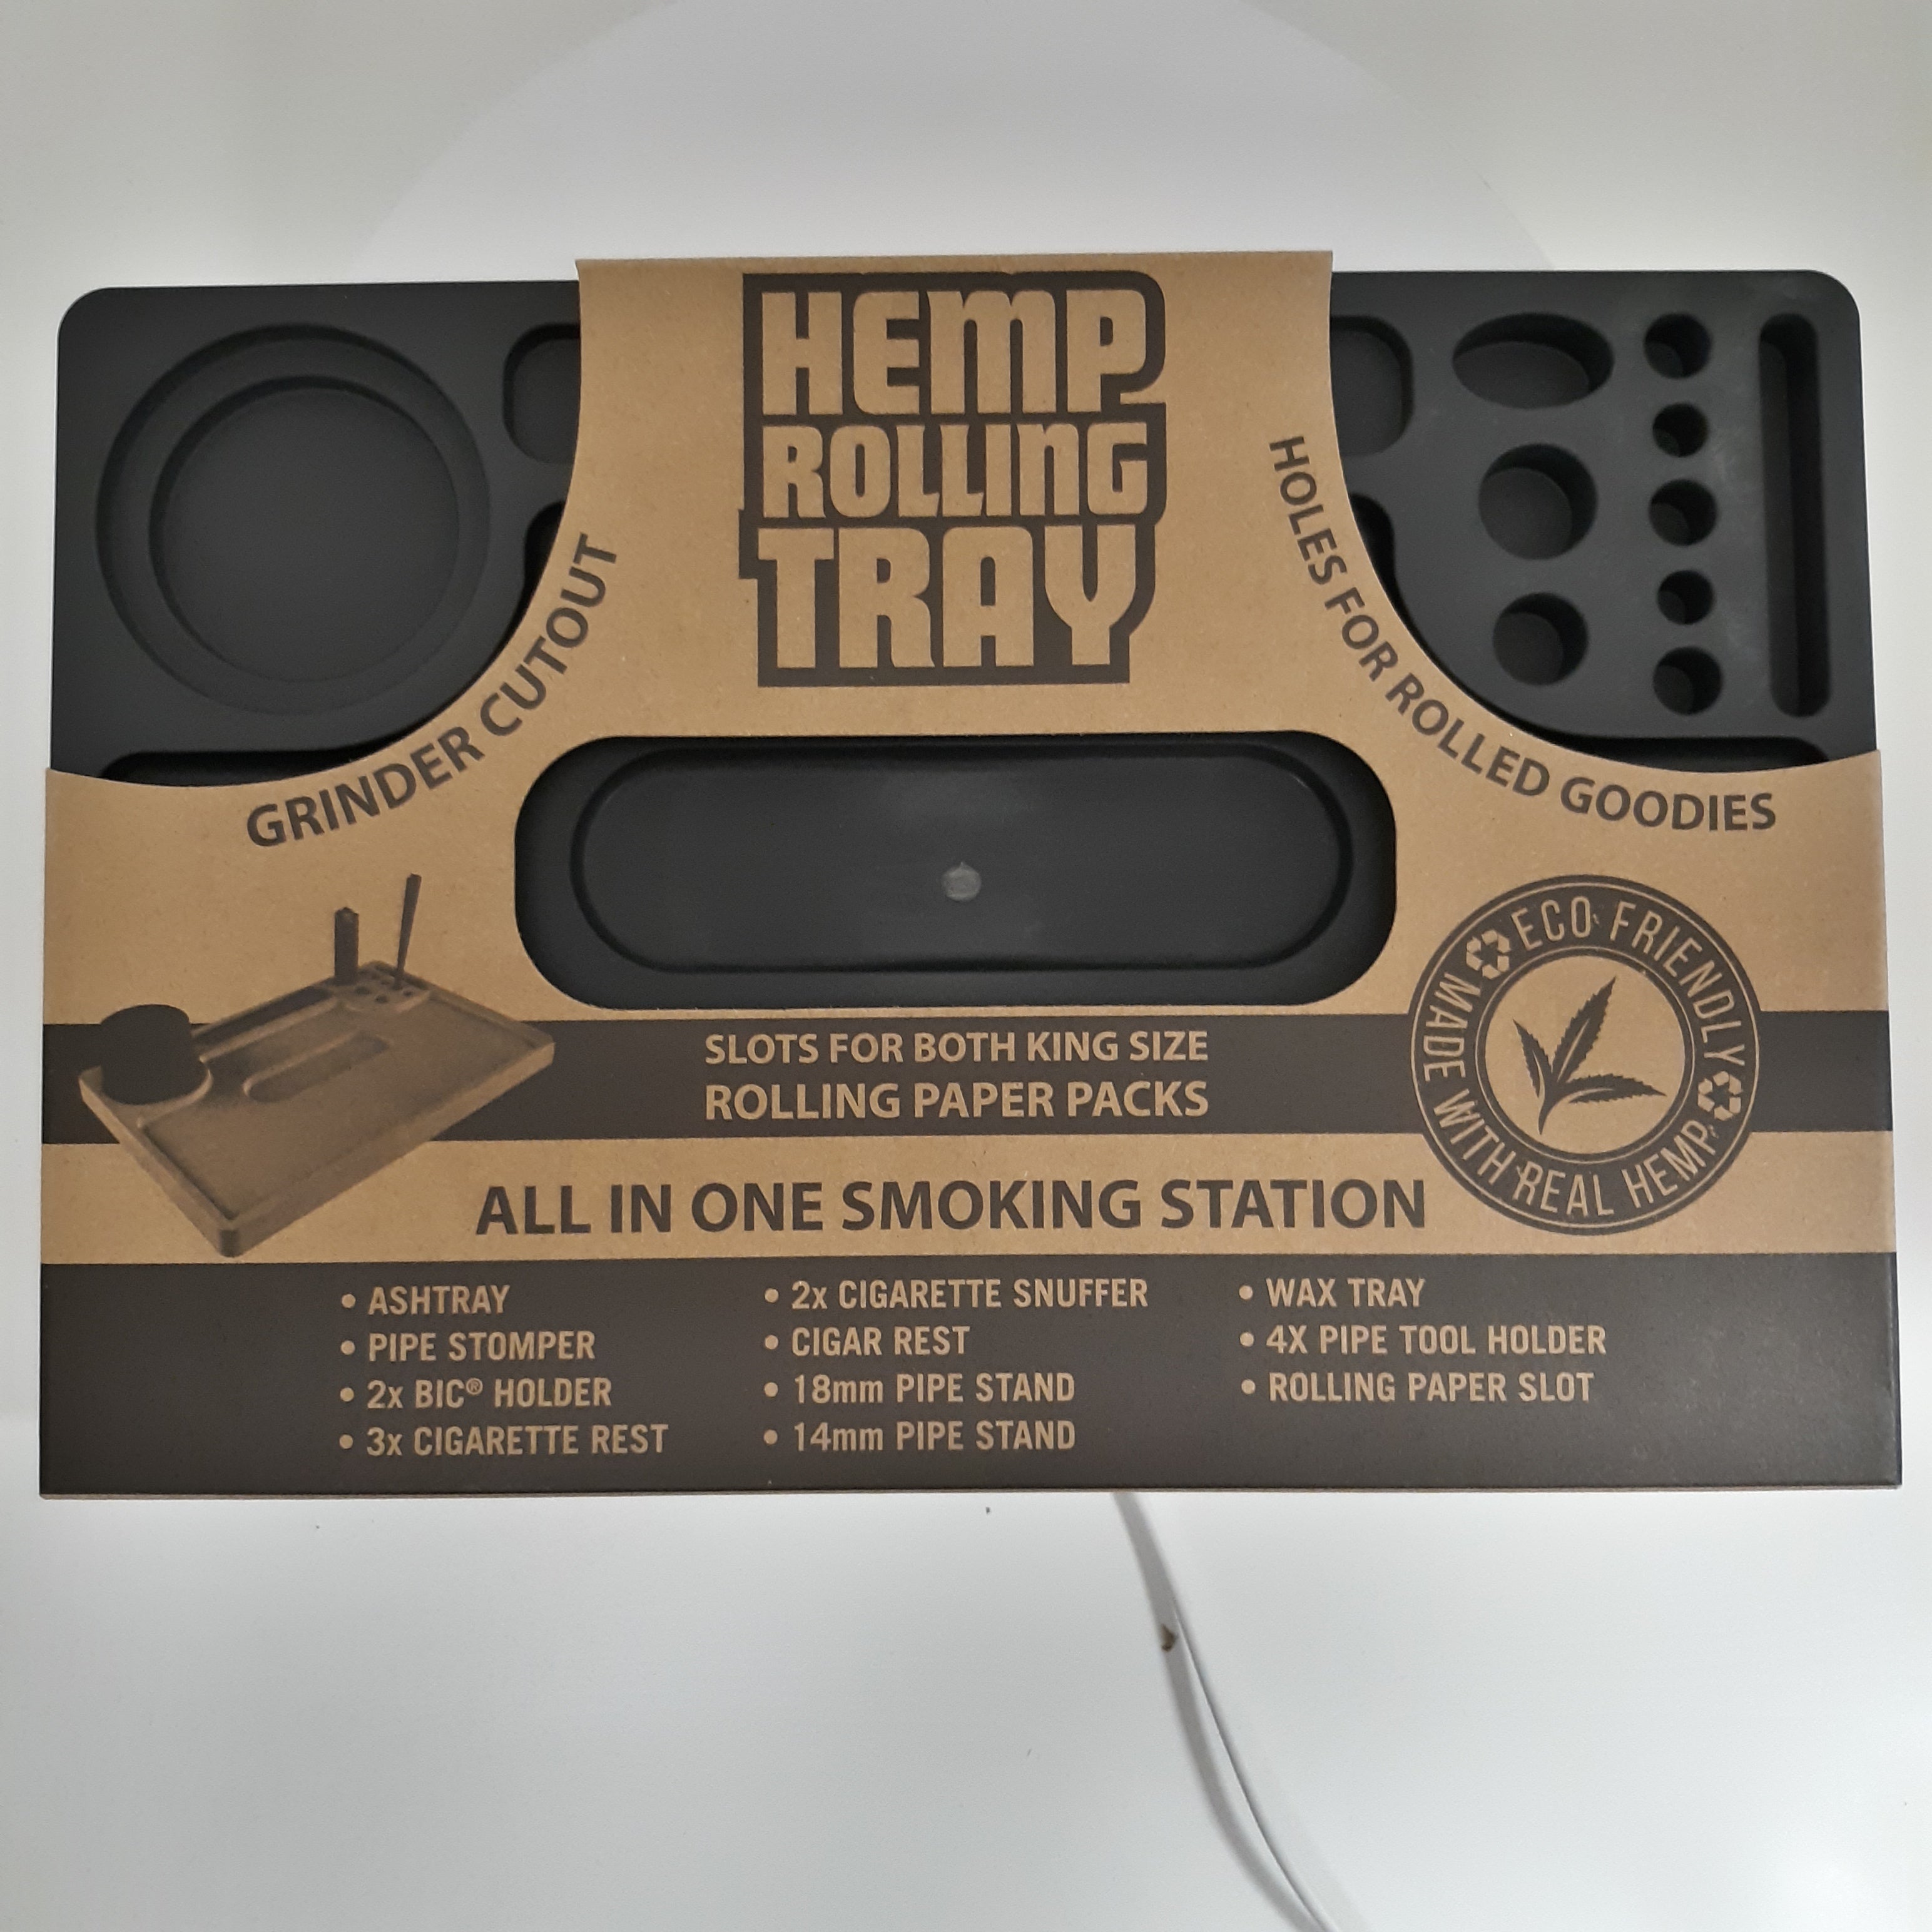 HEMPER - Party Rolling Tray